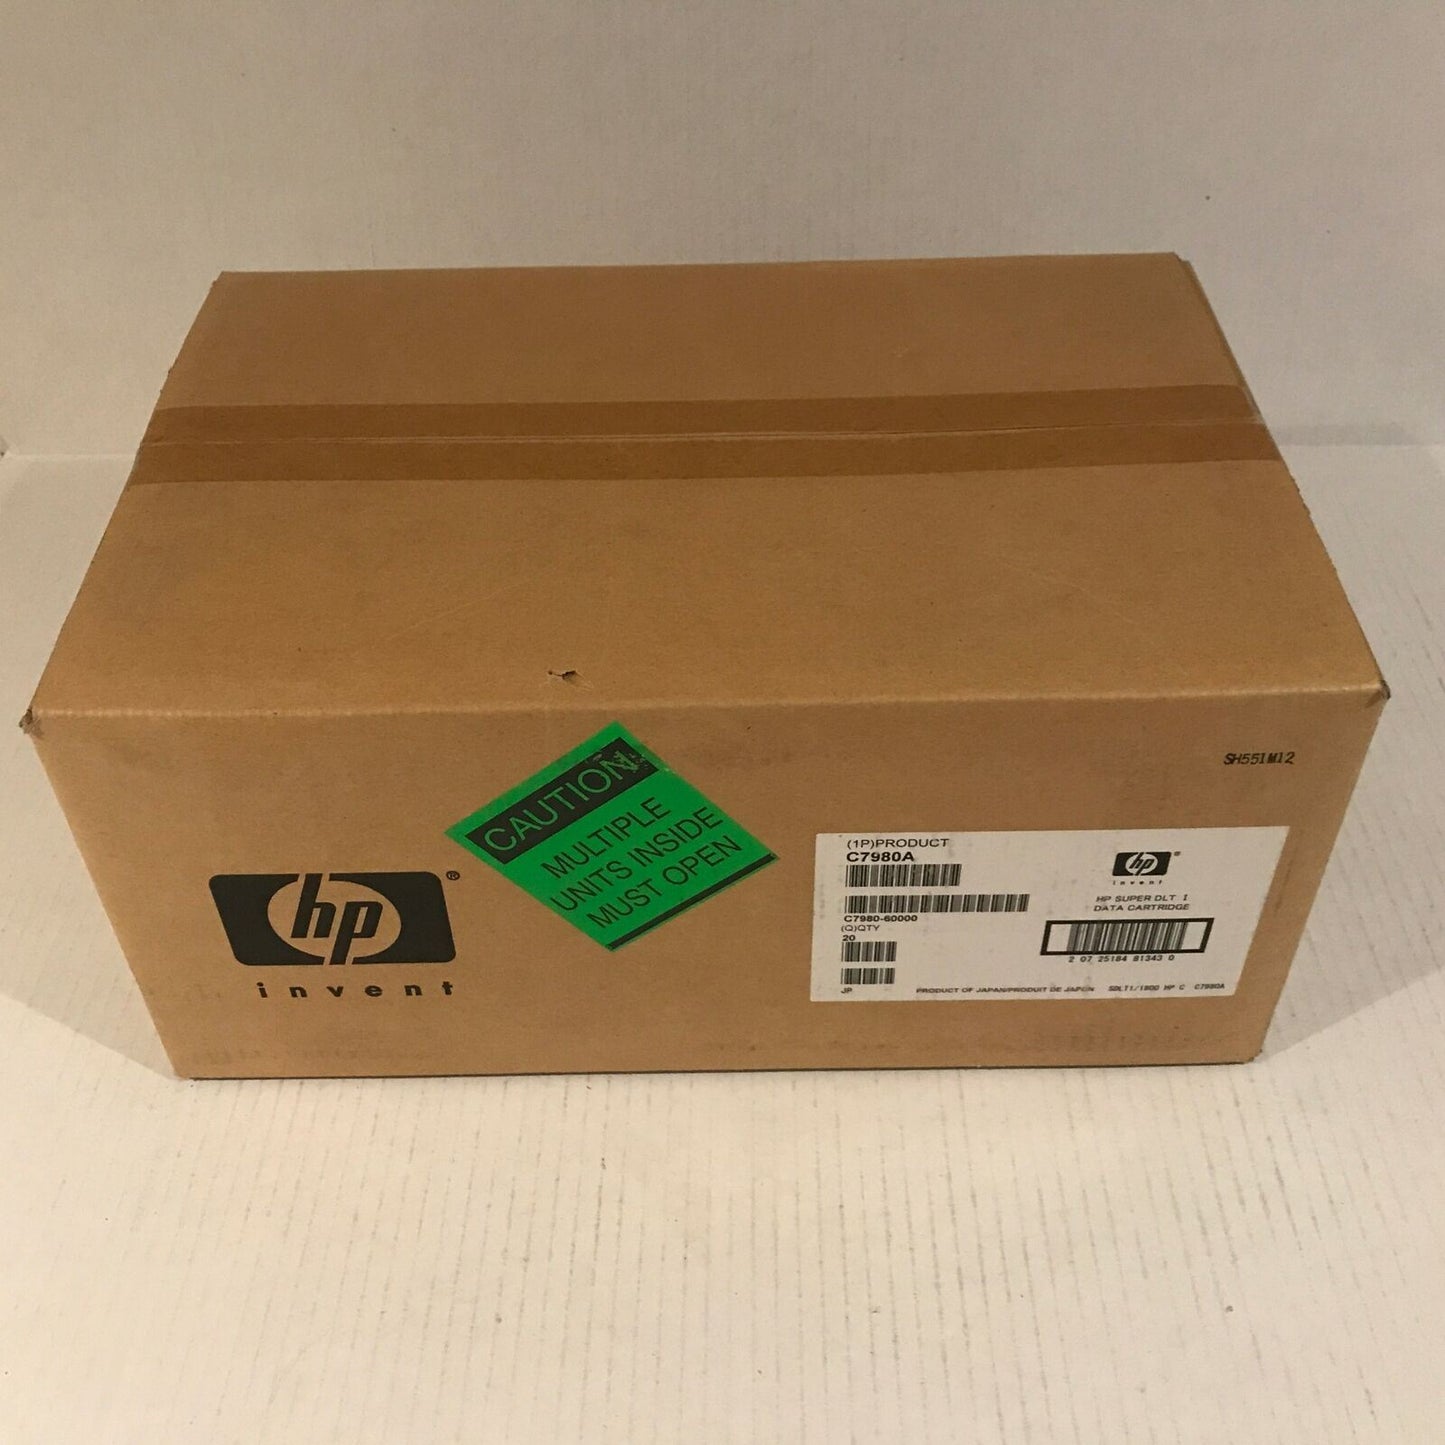 Box of 20 - HP Super 320GB DLT Tape Data Cartridges - C7980A